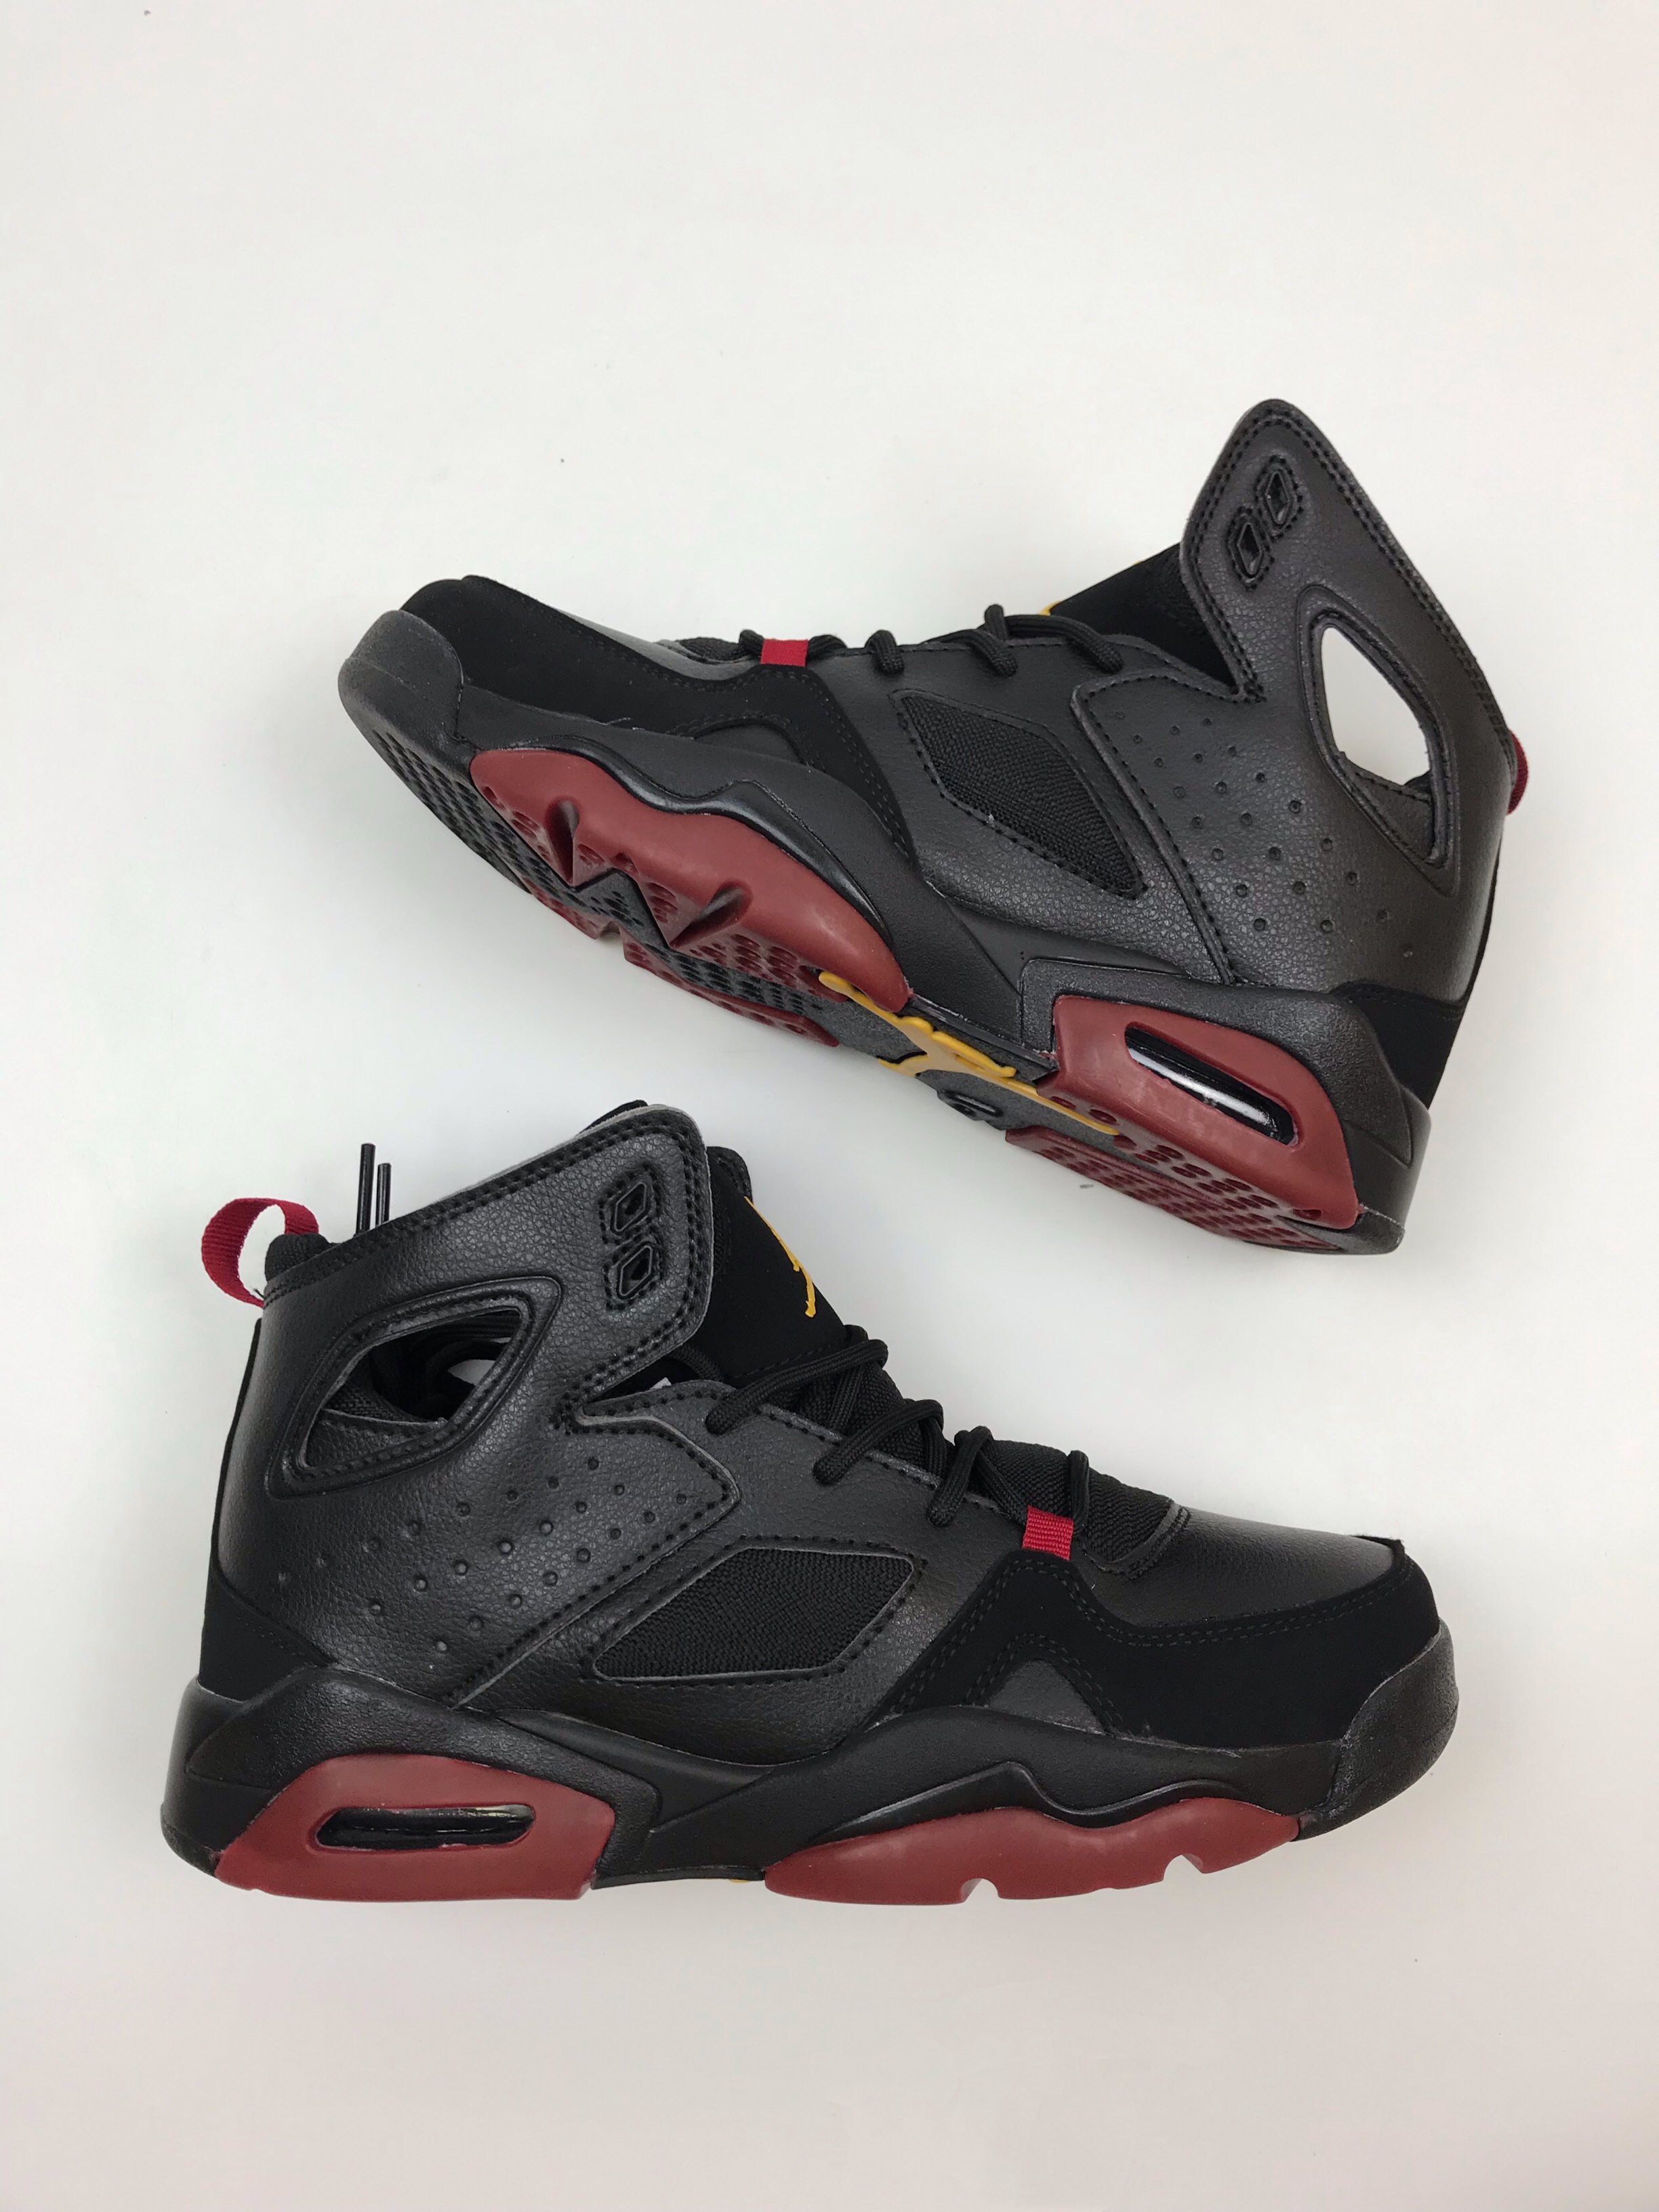 New Air Jordan 6 91 Black Wine Red Shoes